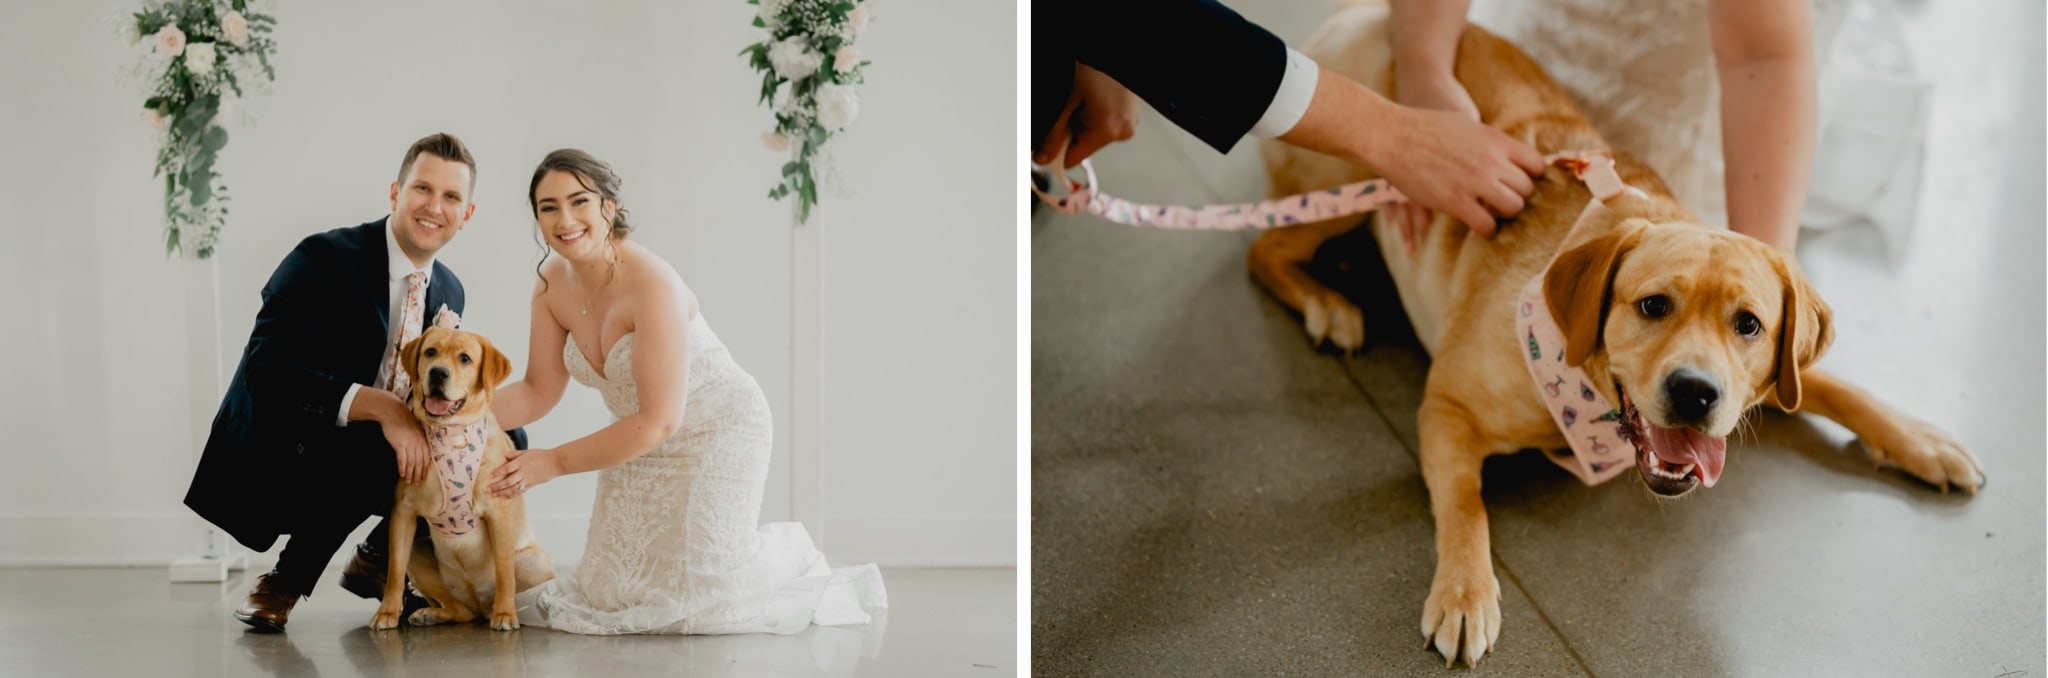 dog photos on wedding day